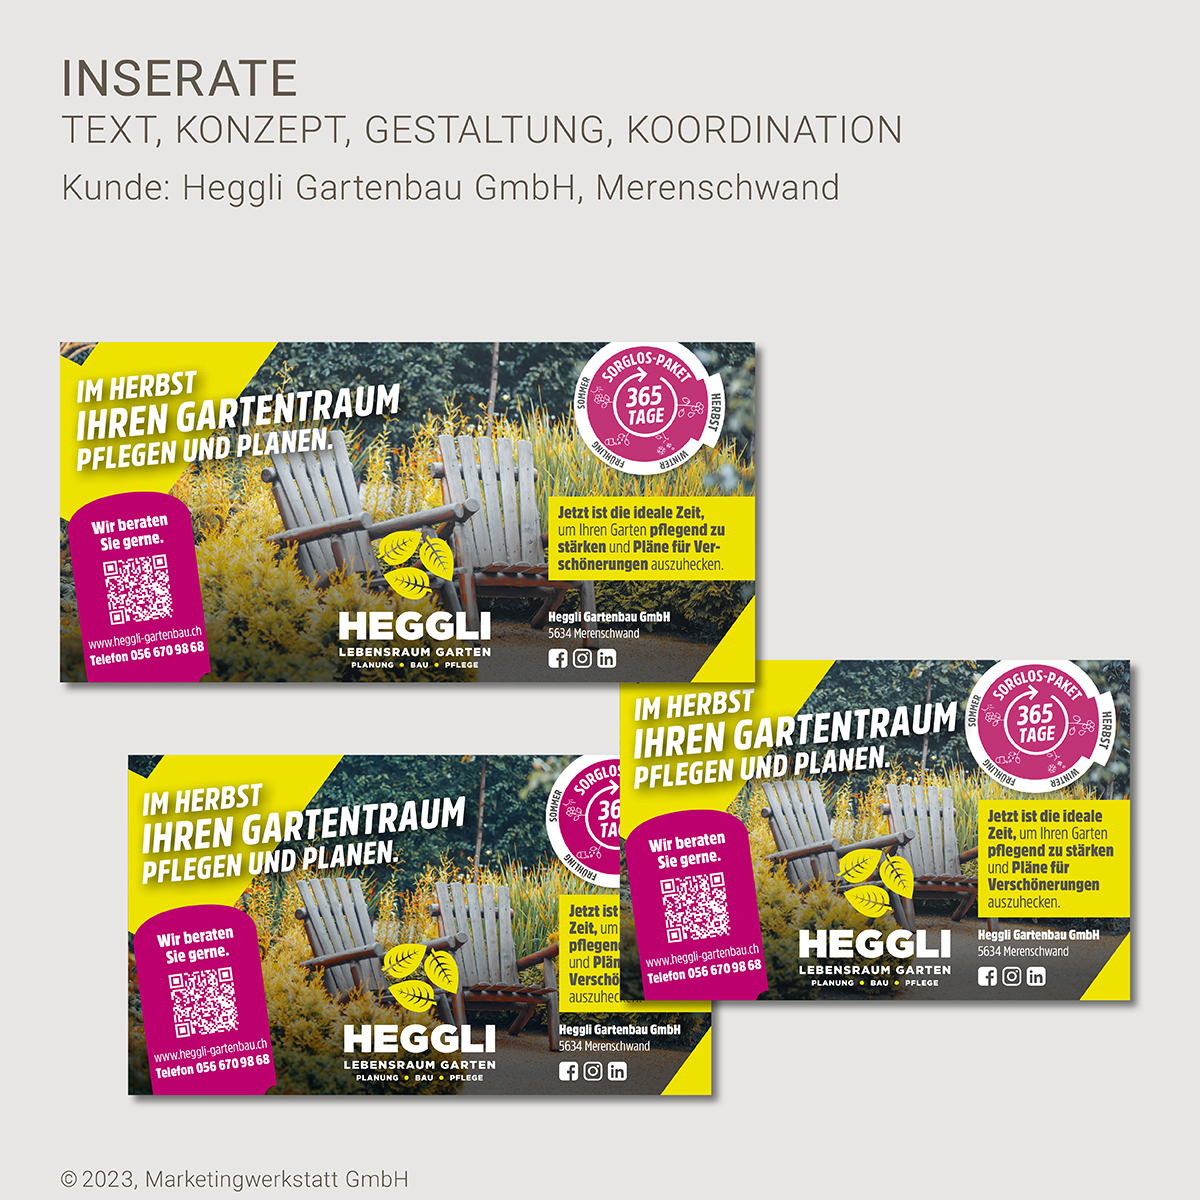 WEB1_MW_Projekt_Heggli-Gartenbau_Inserate_10-2023